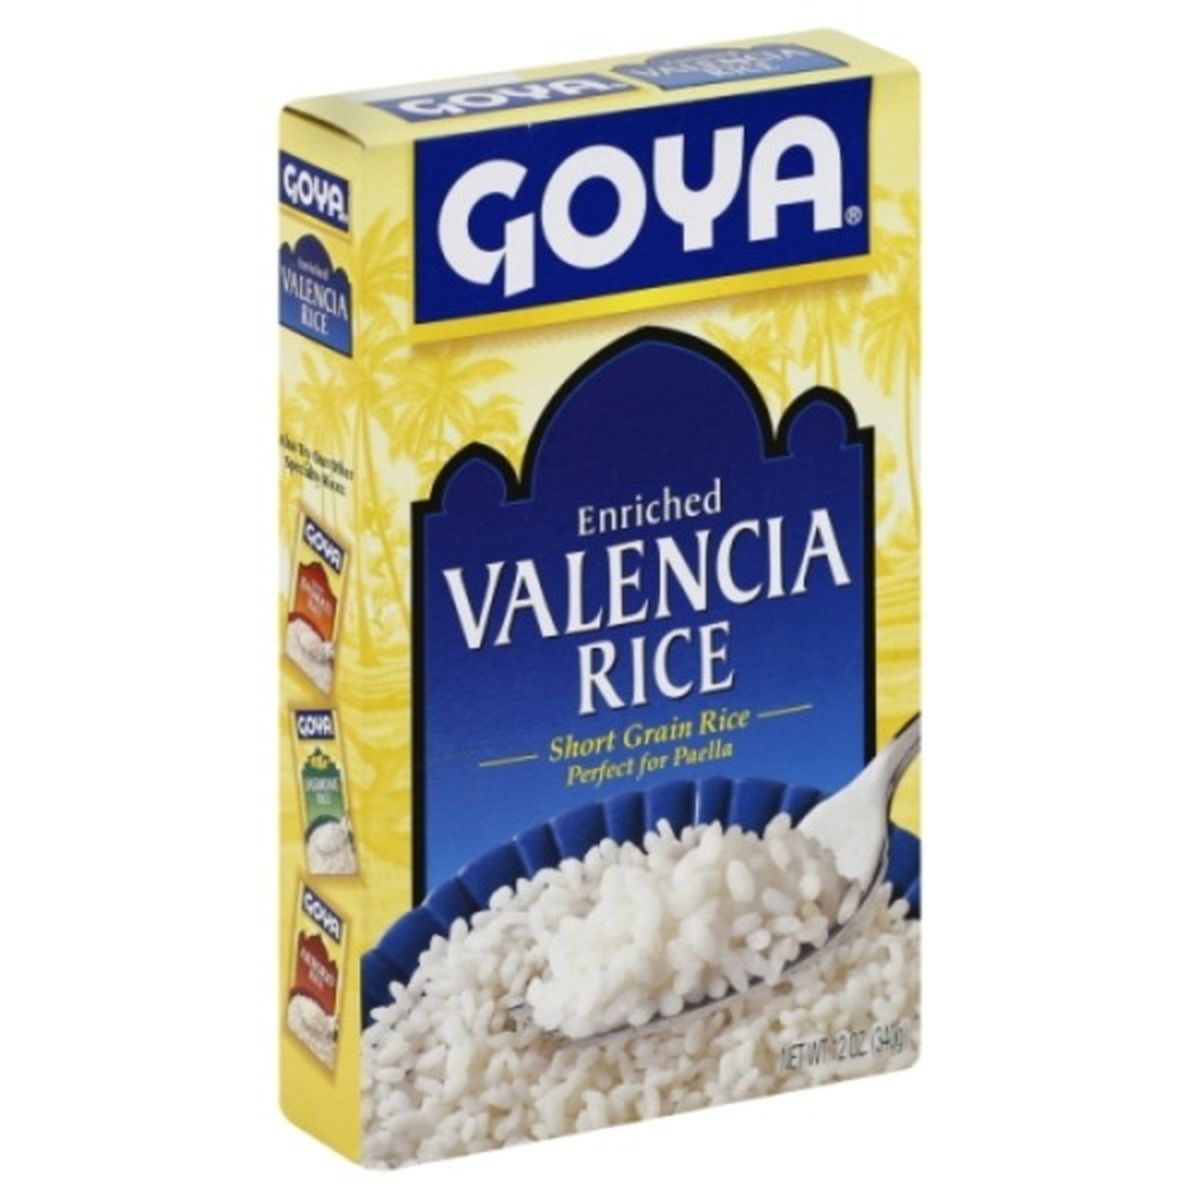 Calories in Goya Valencia Rice, Enriched, Short Grain